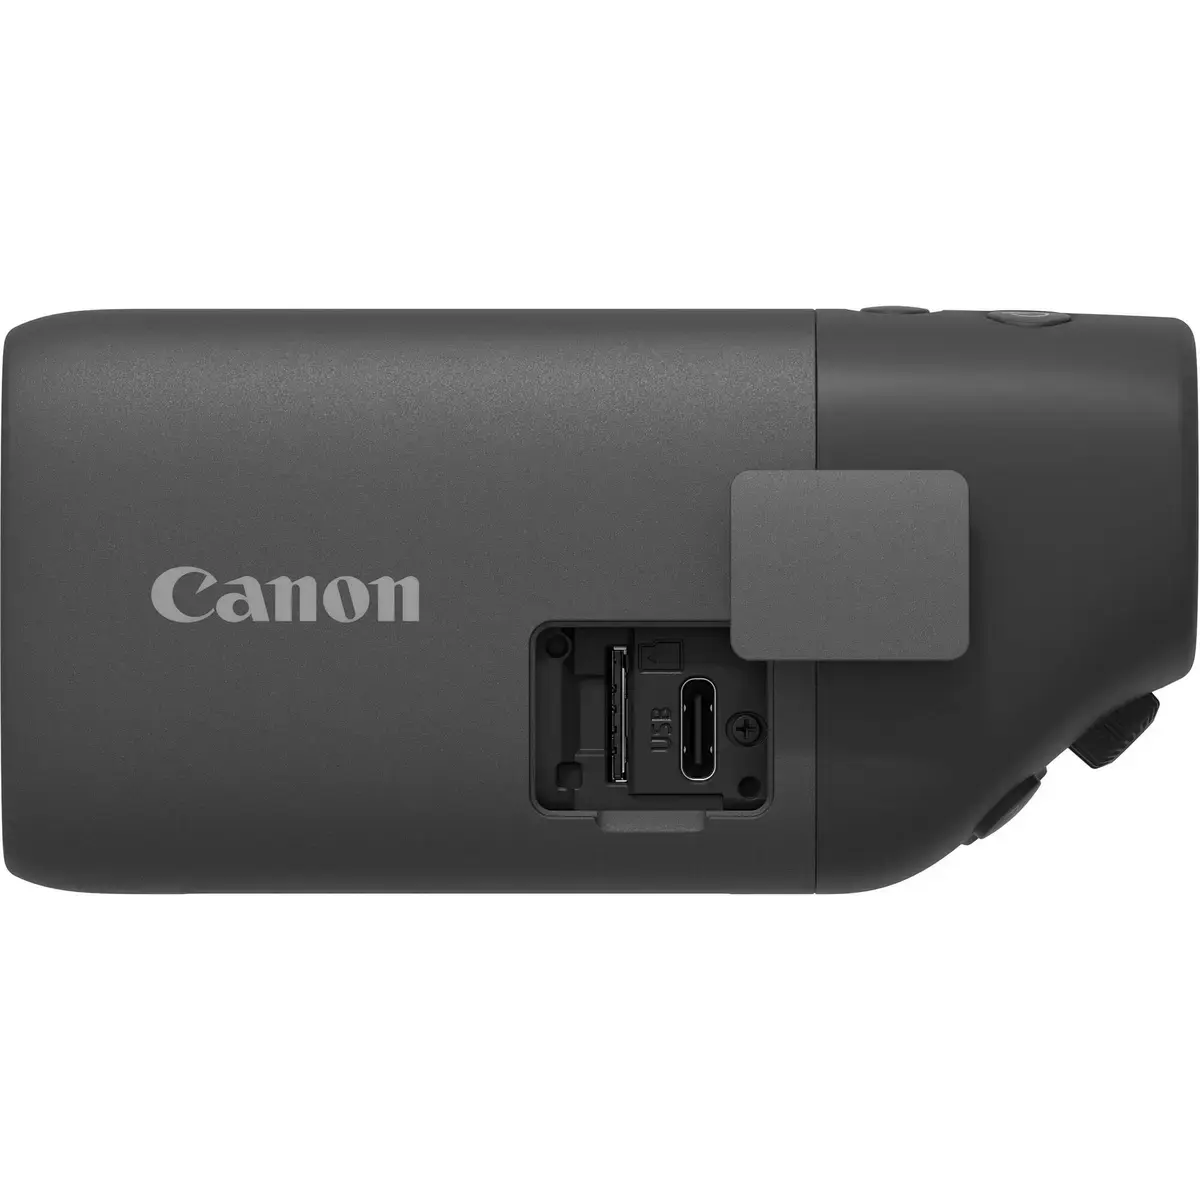 3. Canon PowerShot Zoom Digital Camera (Black)